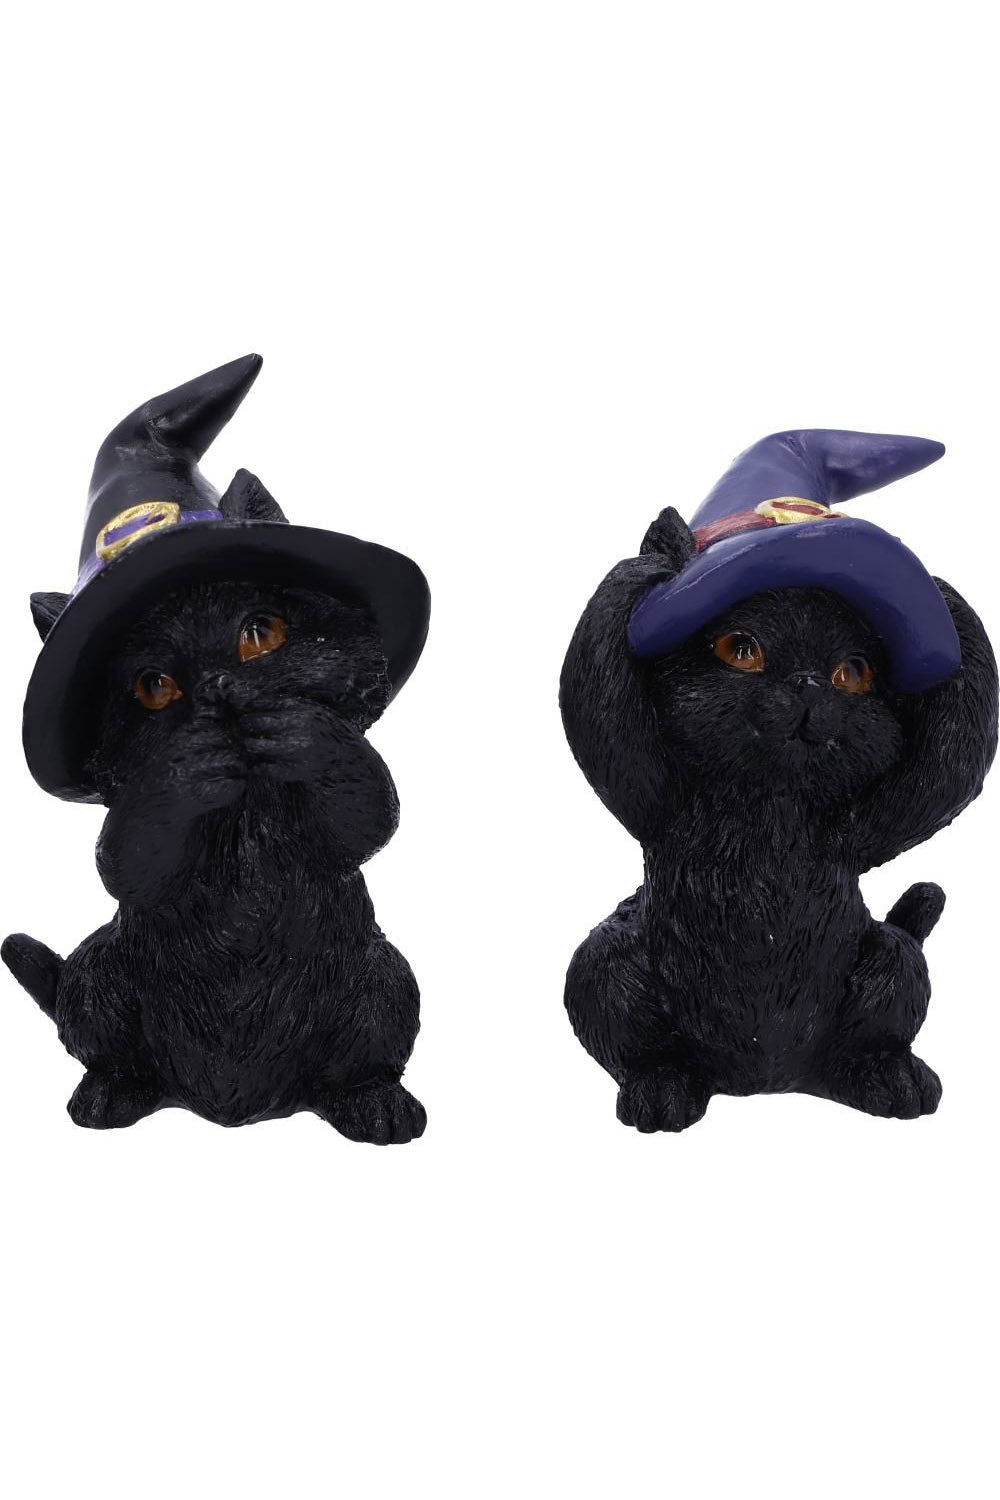 Three Wise Familiars See No Hear No Speak No Evil Black Cats Figurines